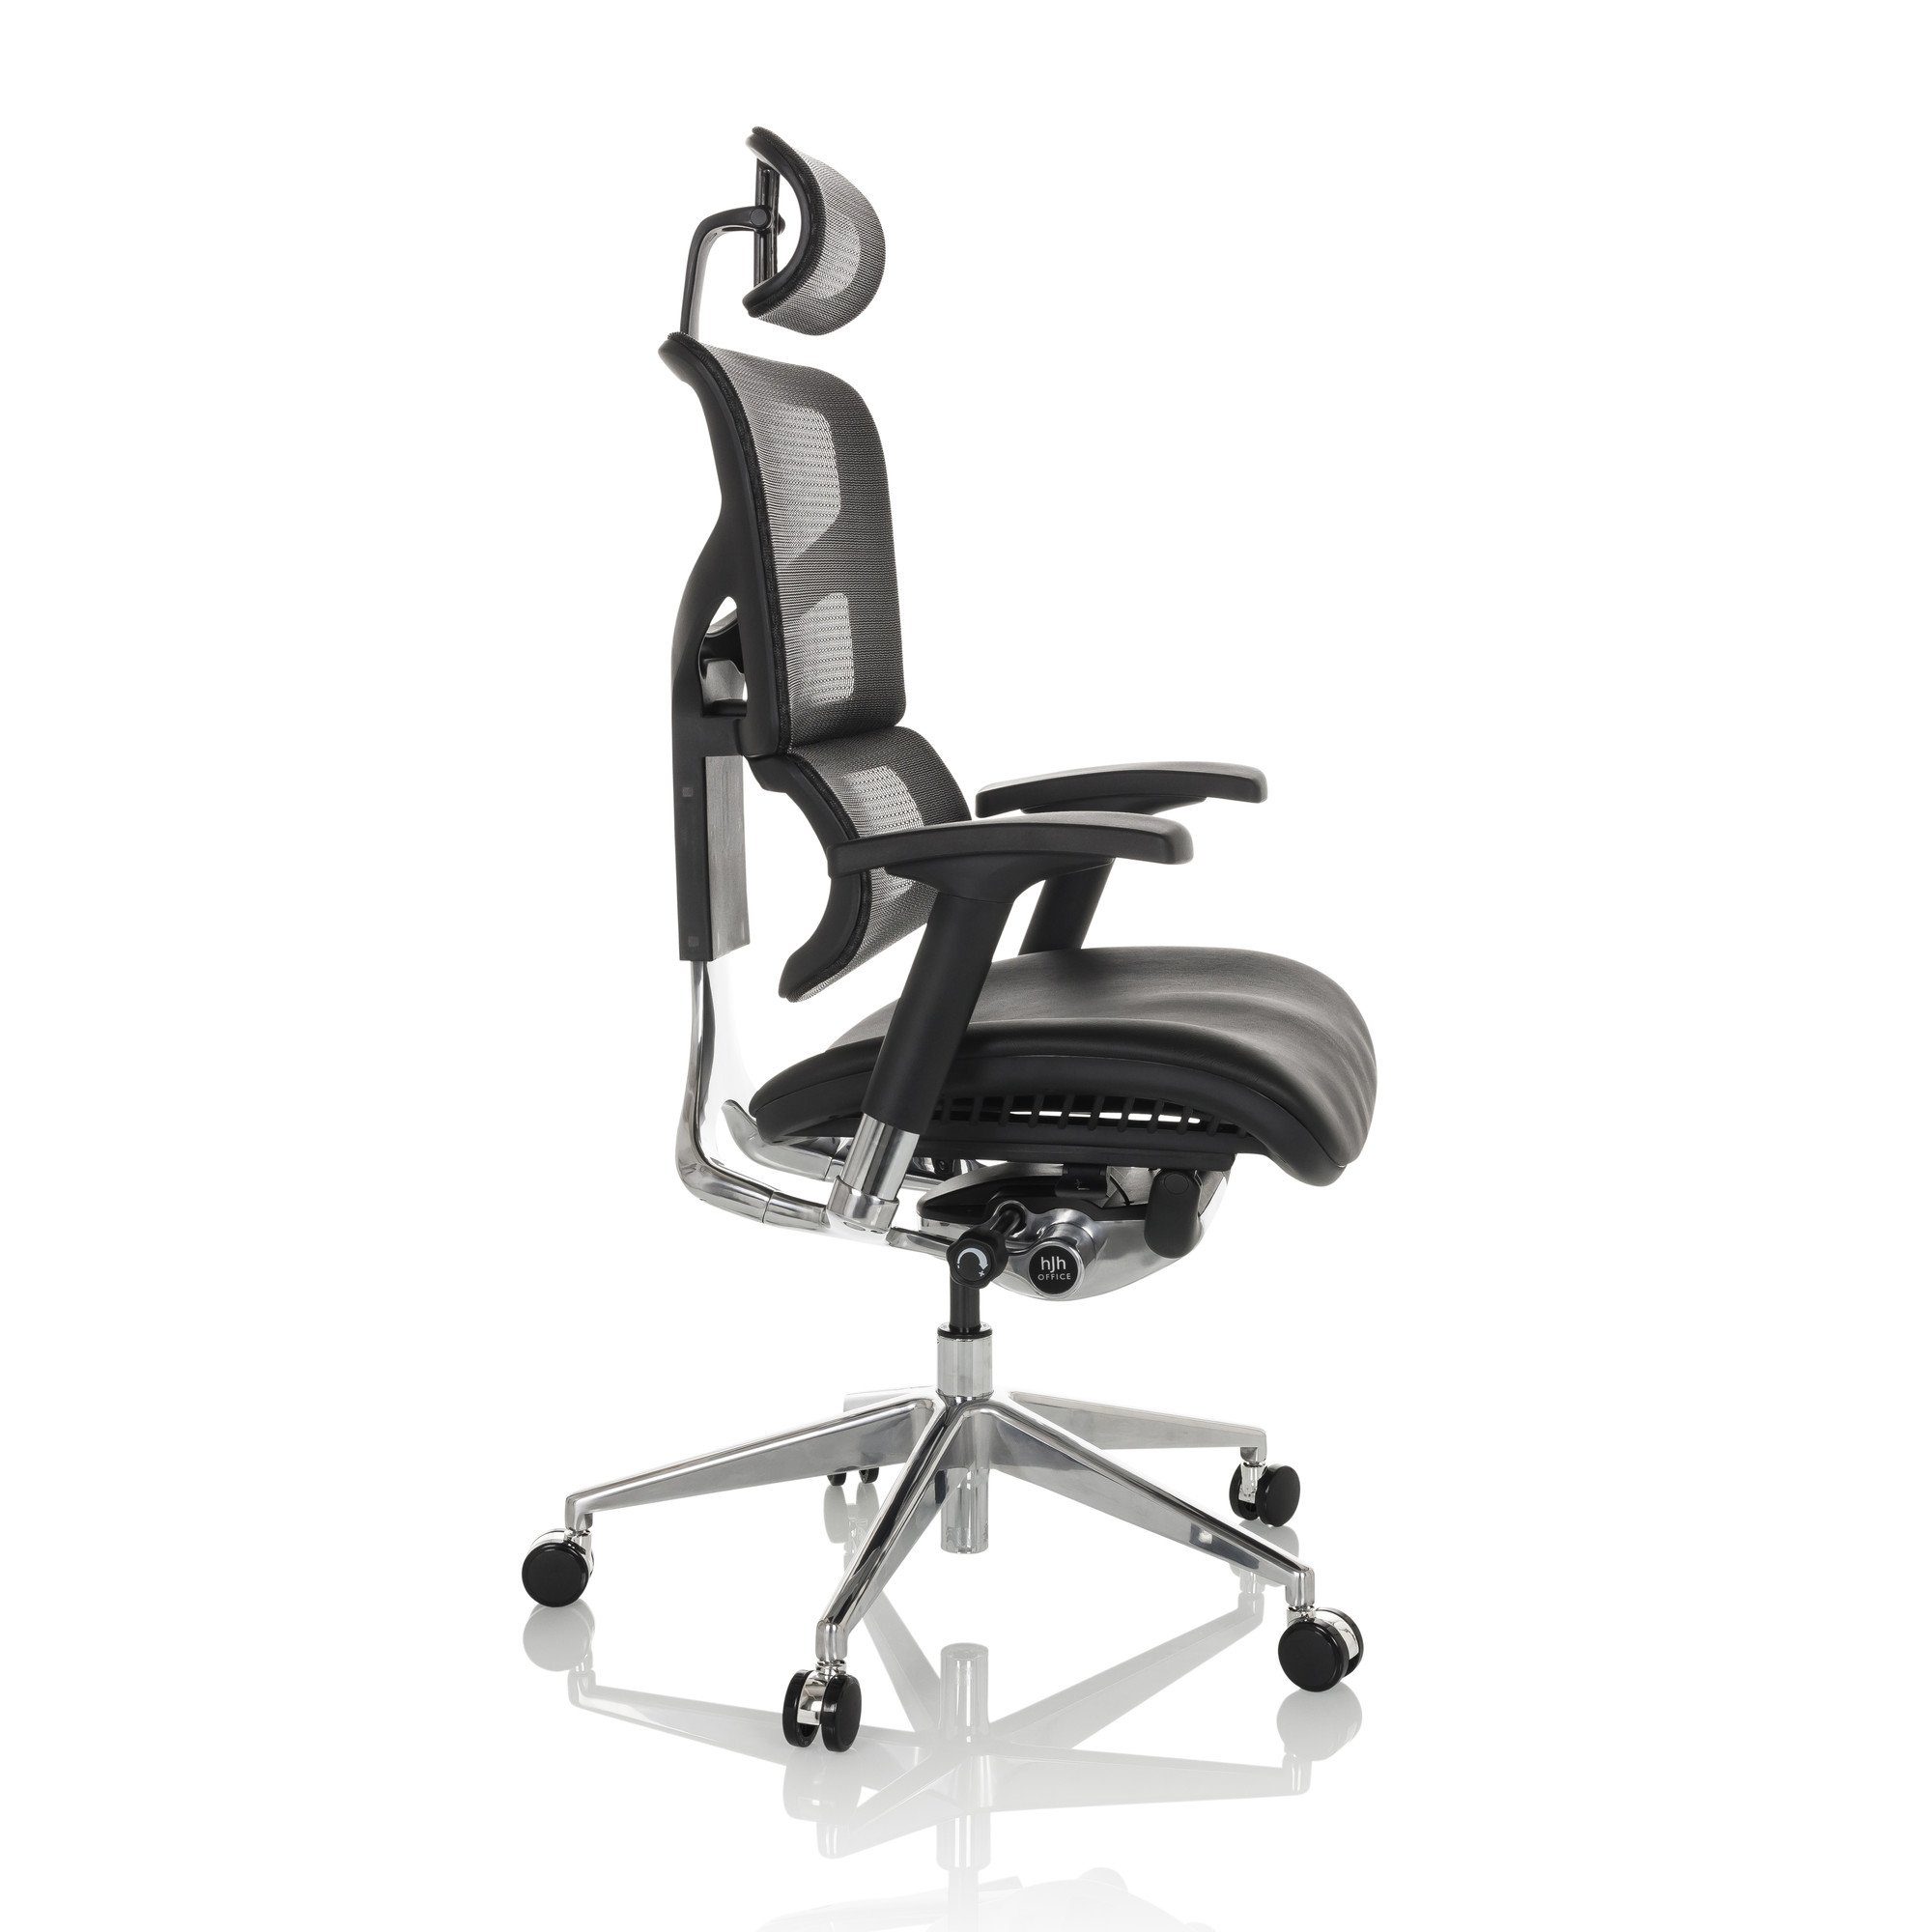 (1 Drehstuhl OFFICE High End Schreibtischstuhl LM hjh ergonomisch St), Leder/Netzstoff Bürostuhl ERGO-U2